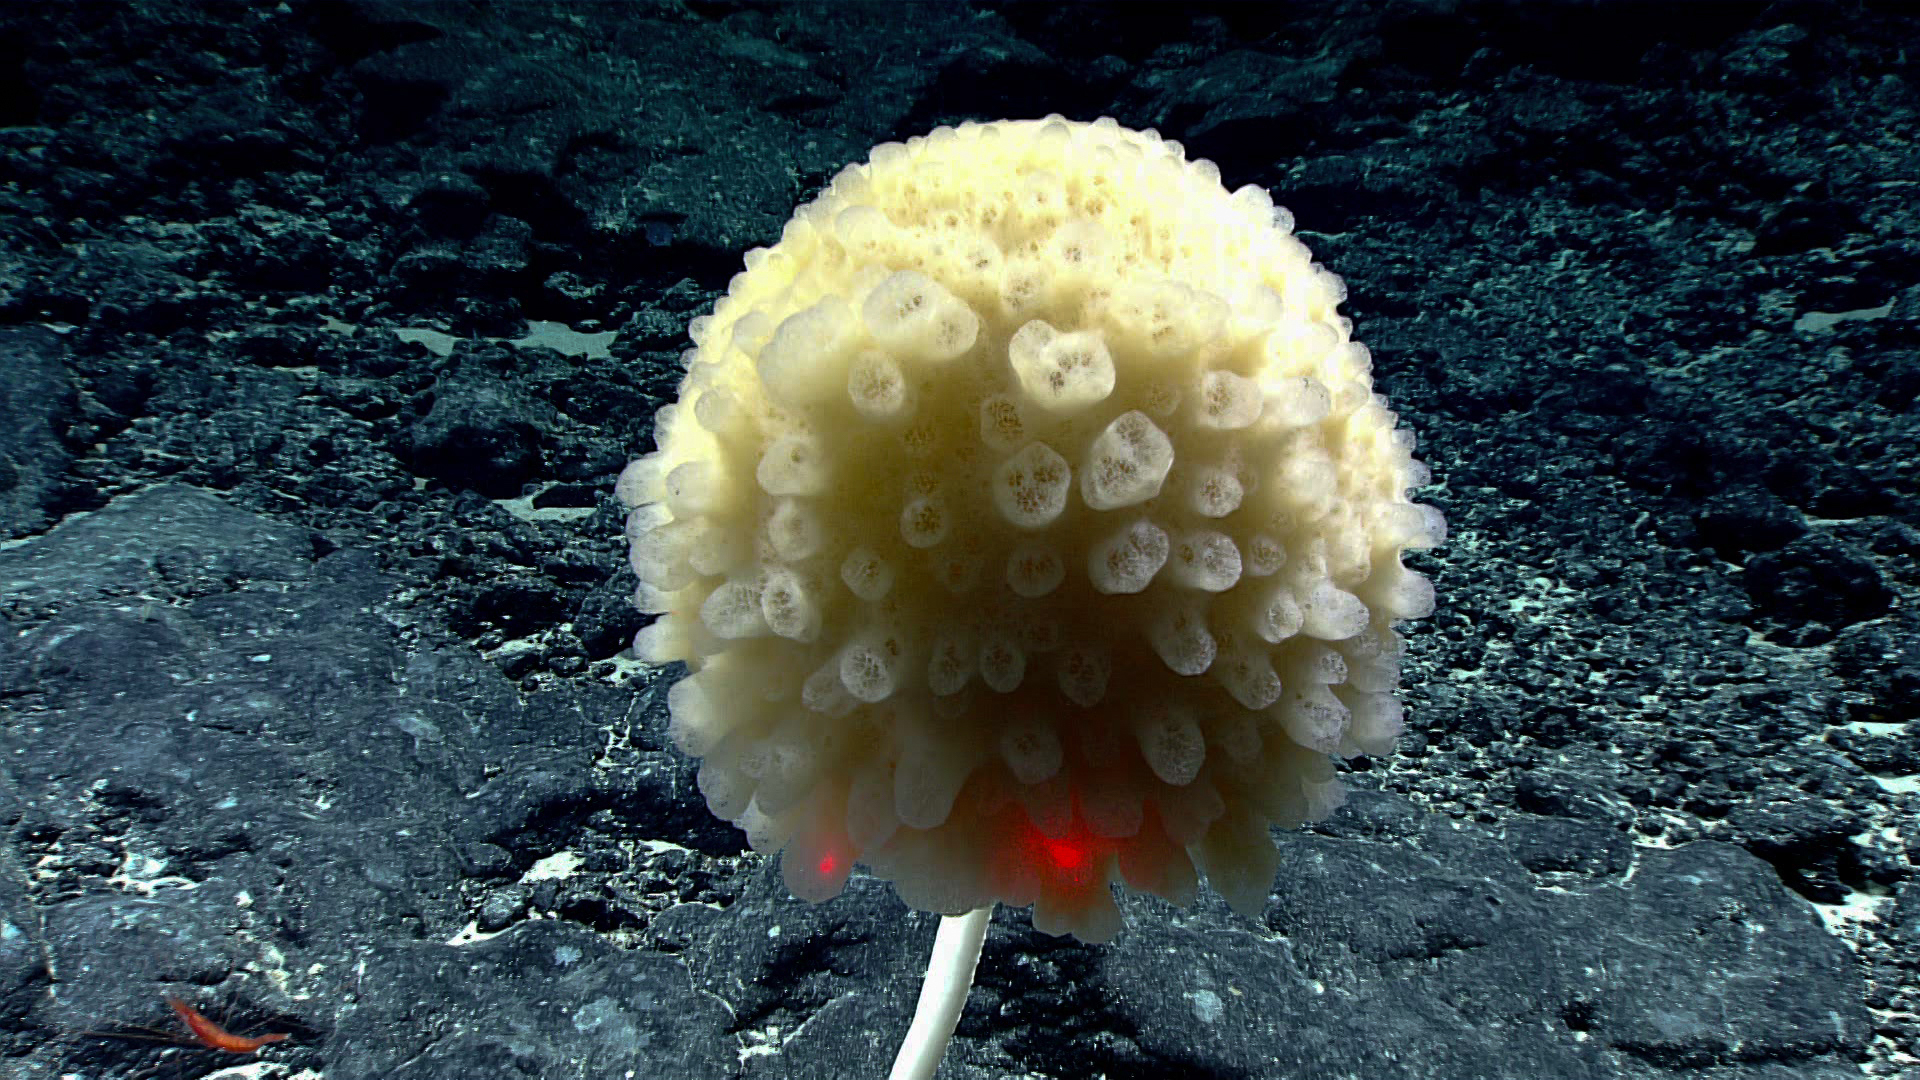 Stalked glass sponge. (Image: NOAA)